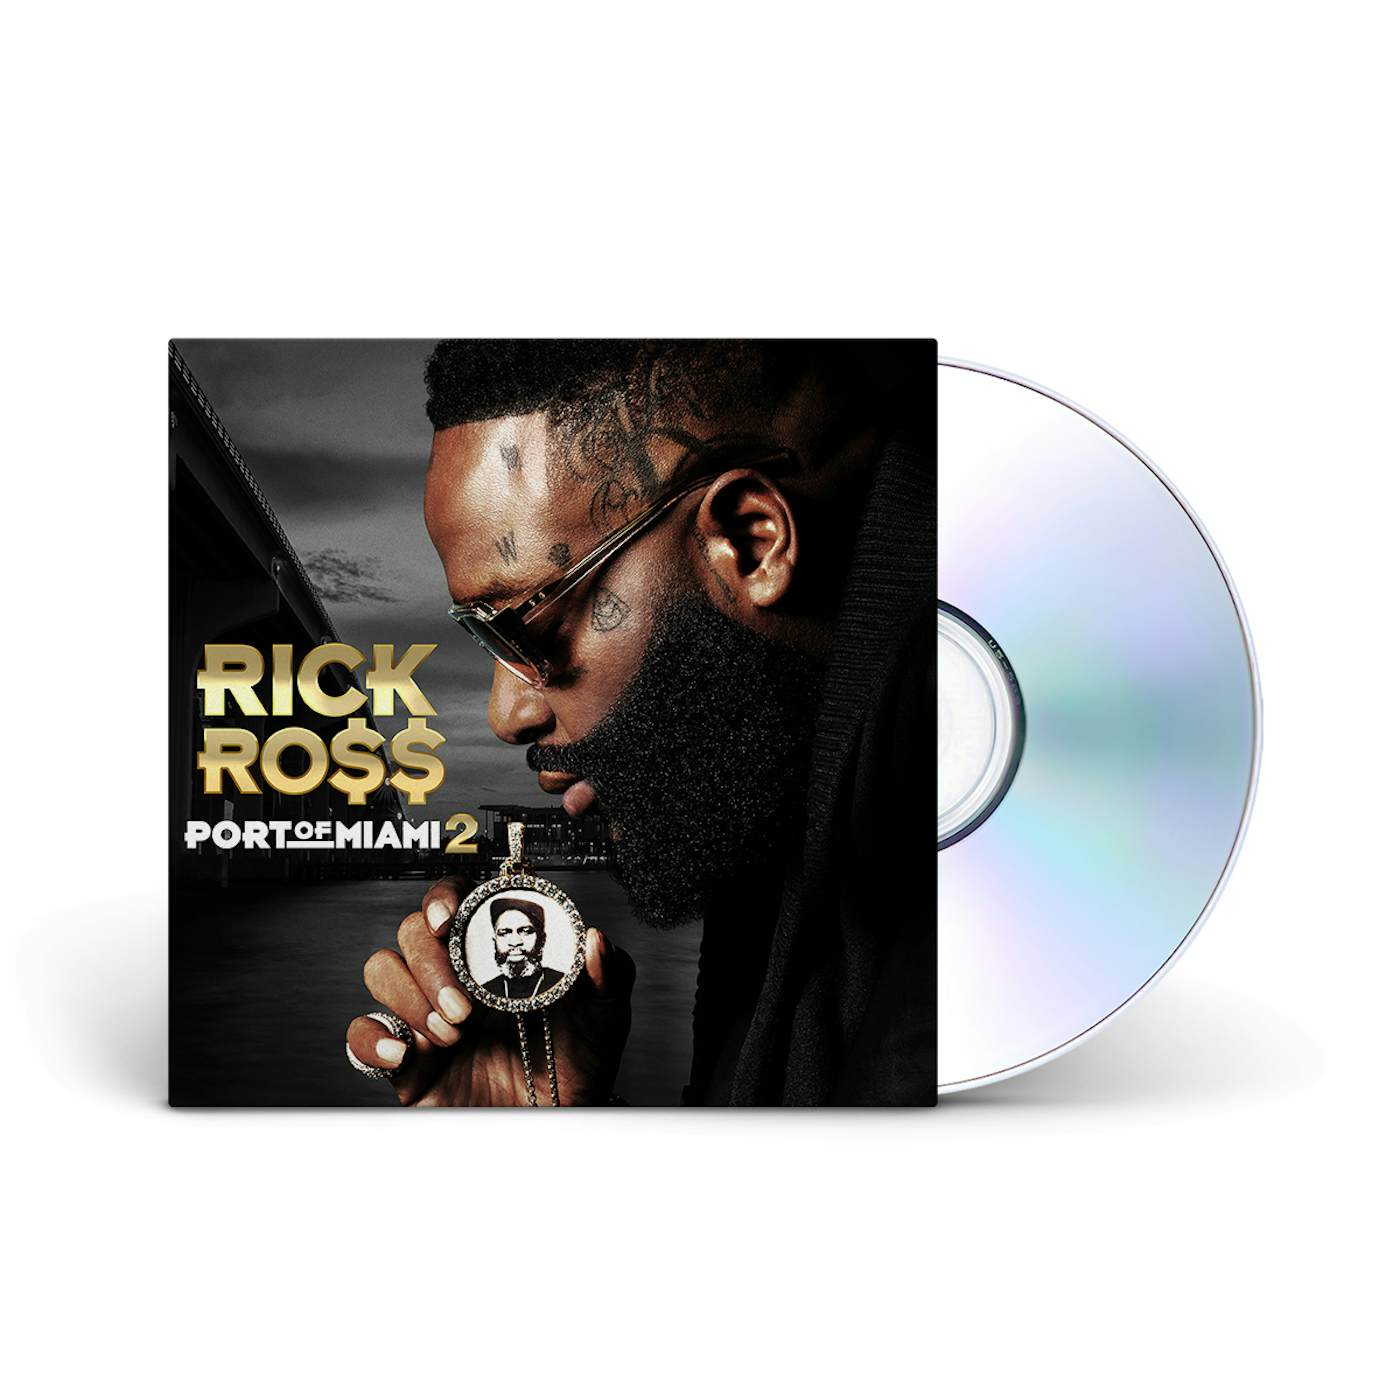 Rick Ross "Port of Miami 2" CD